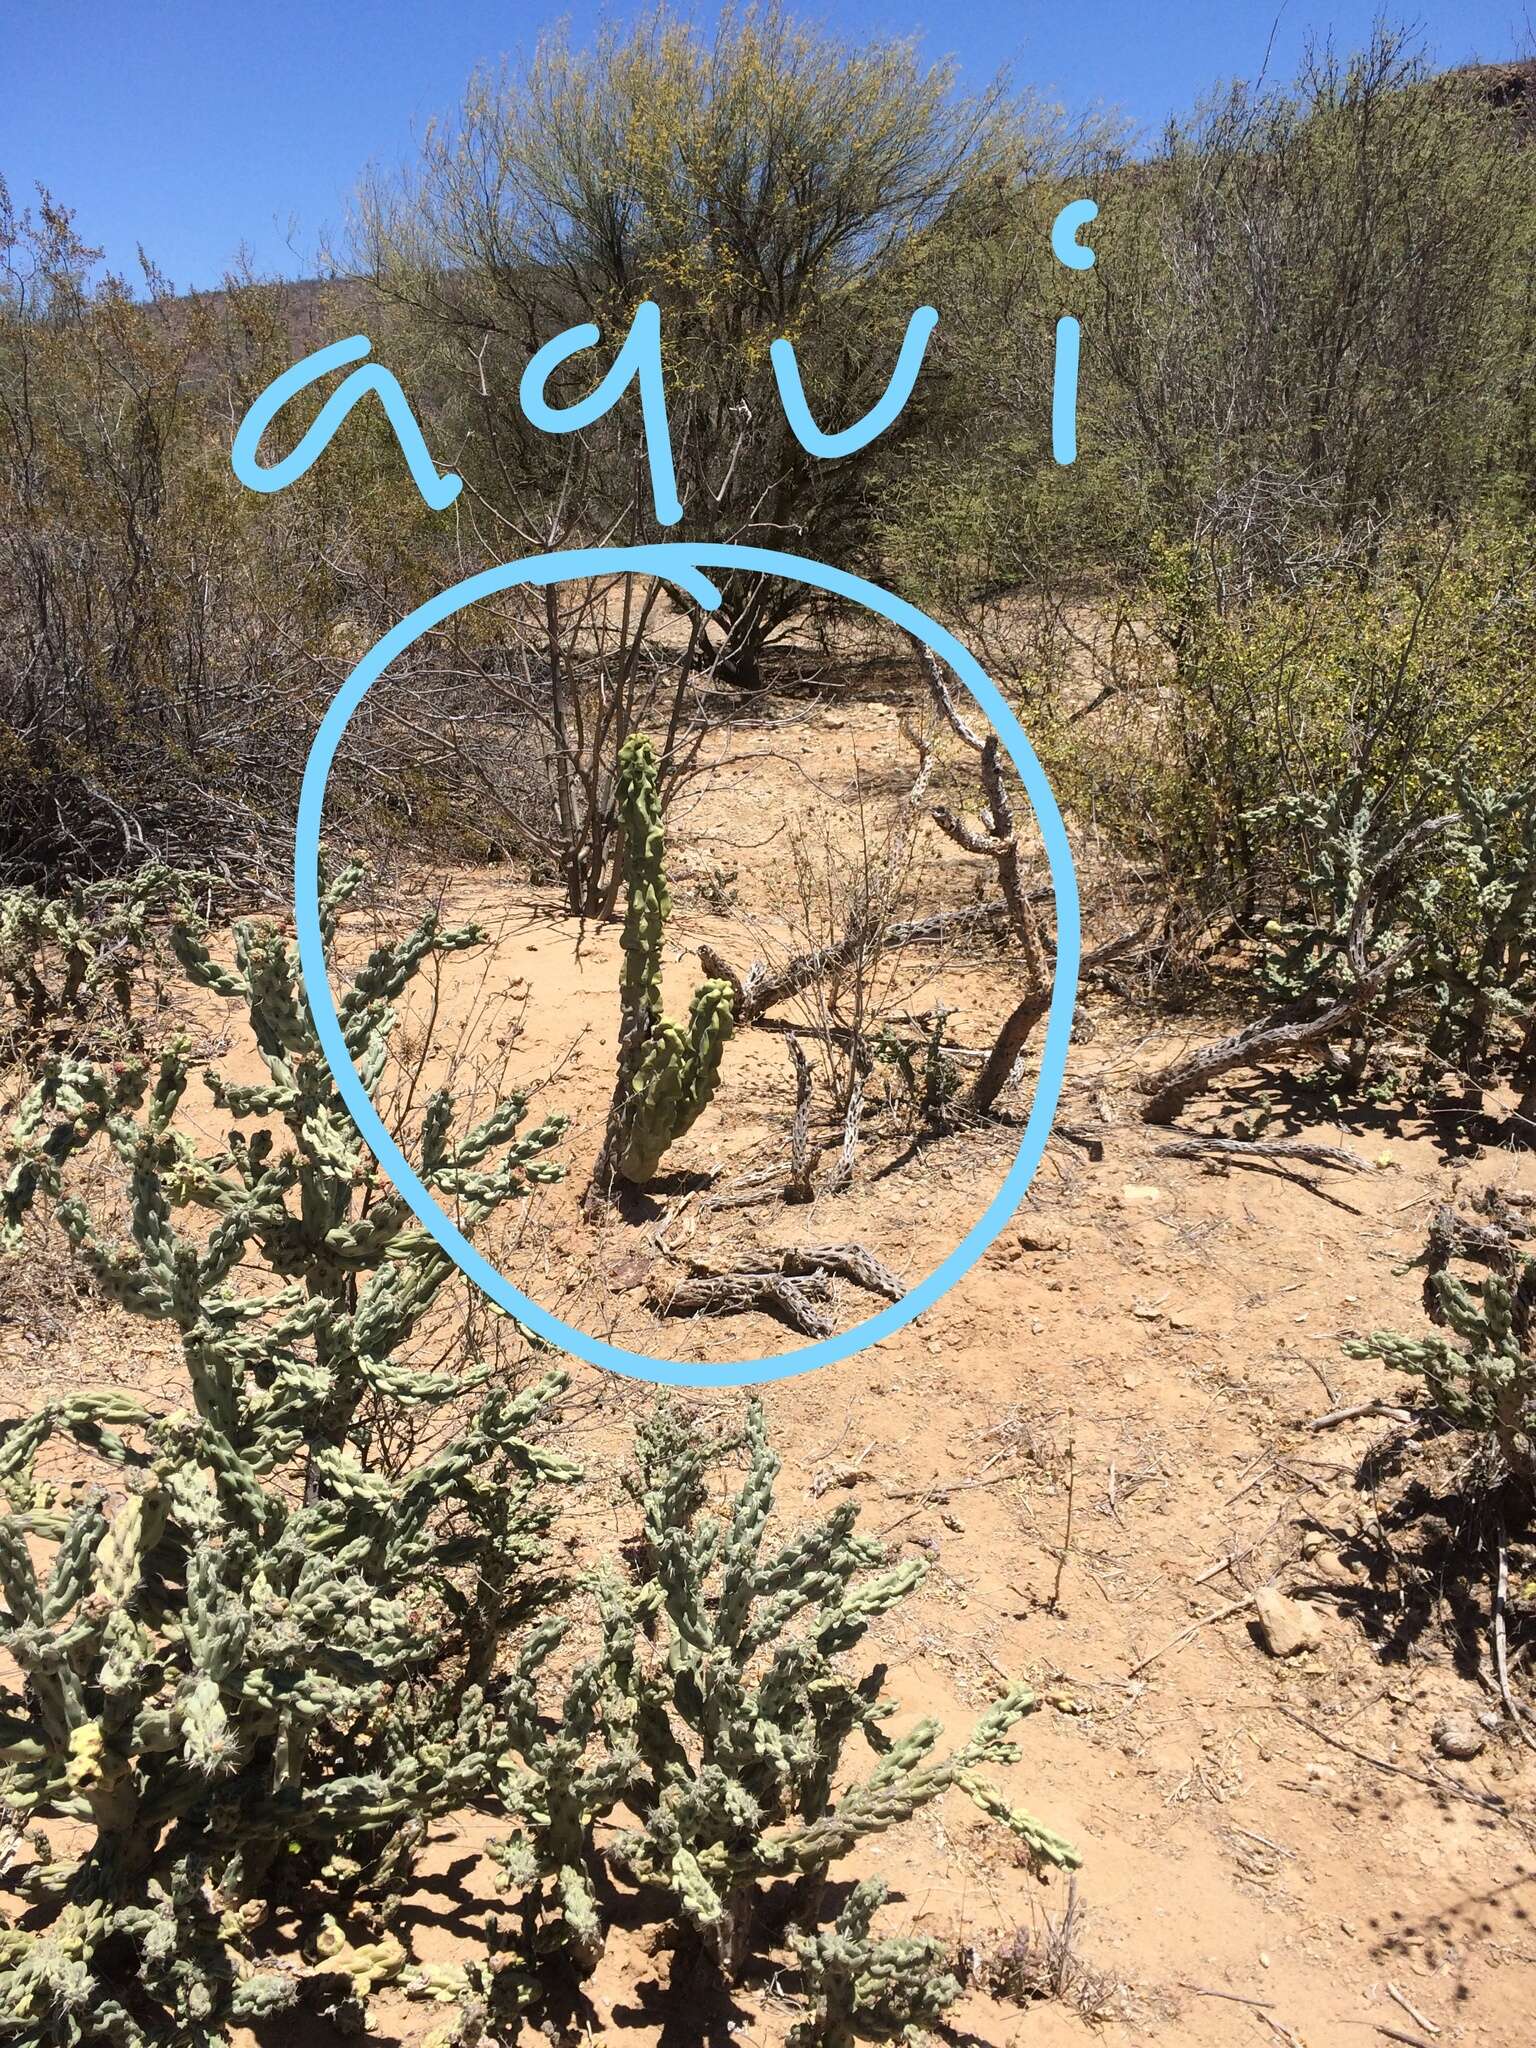 Image of senita cactus